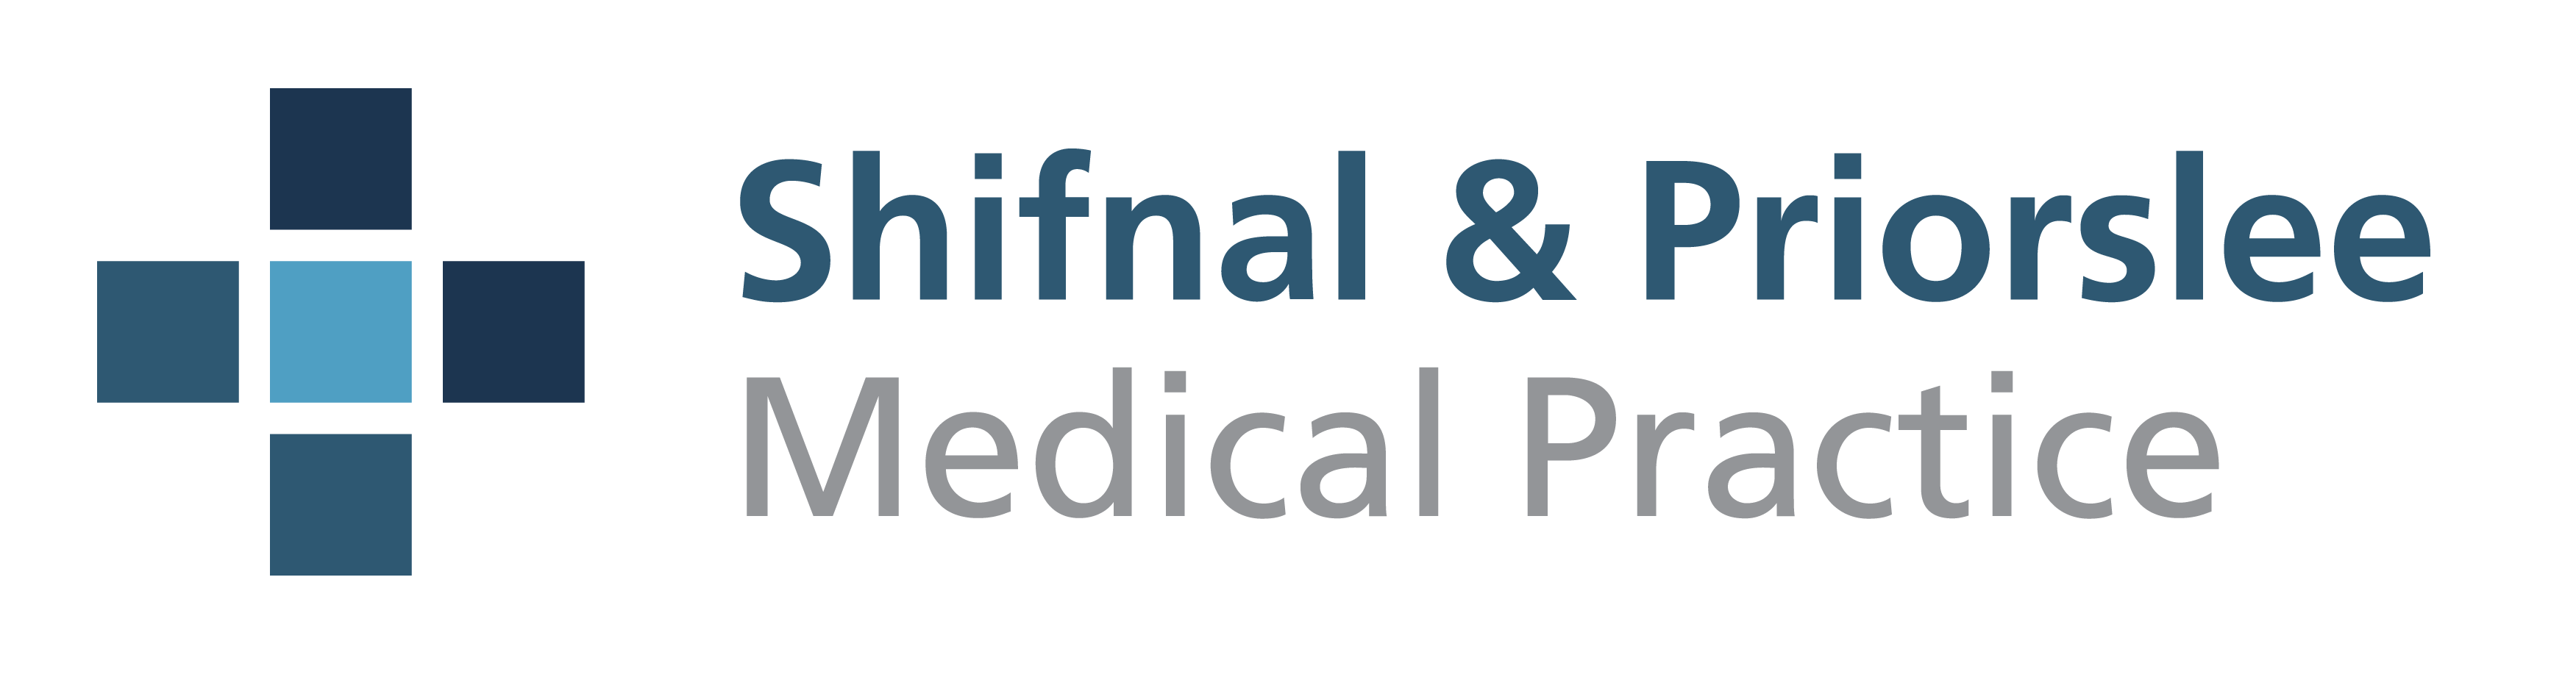 Shifnal & Priorslee Medical Practice